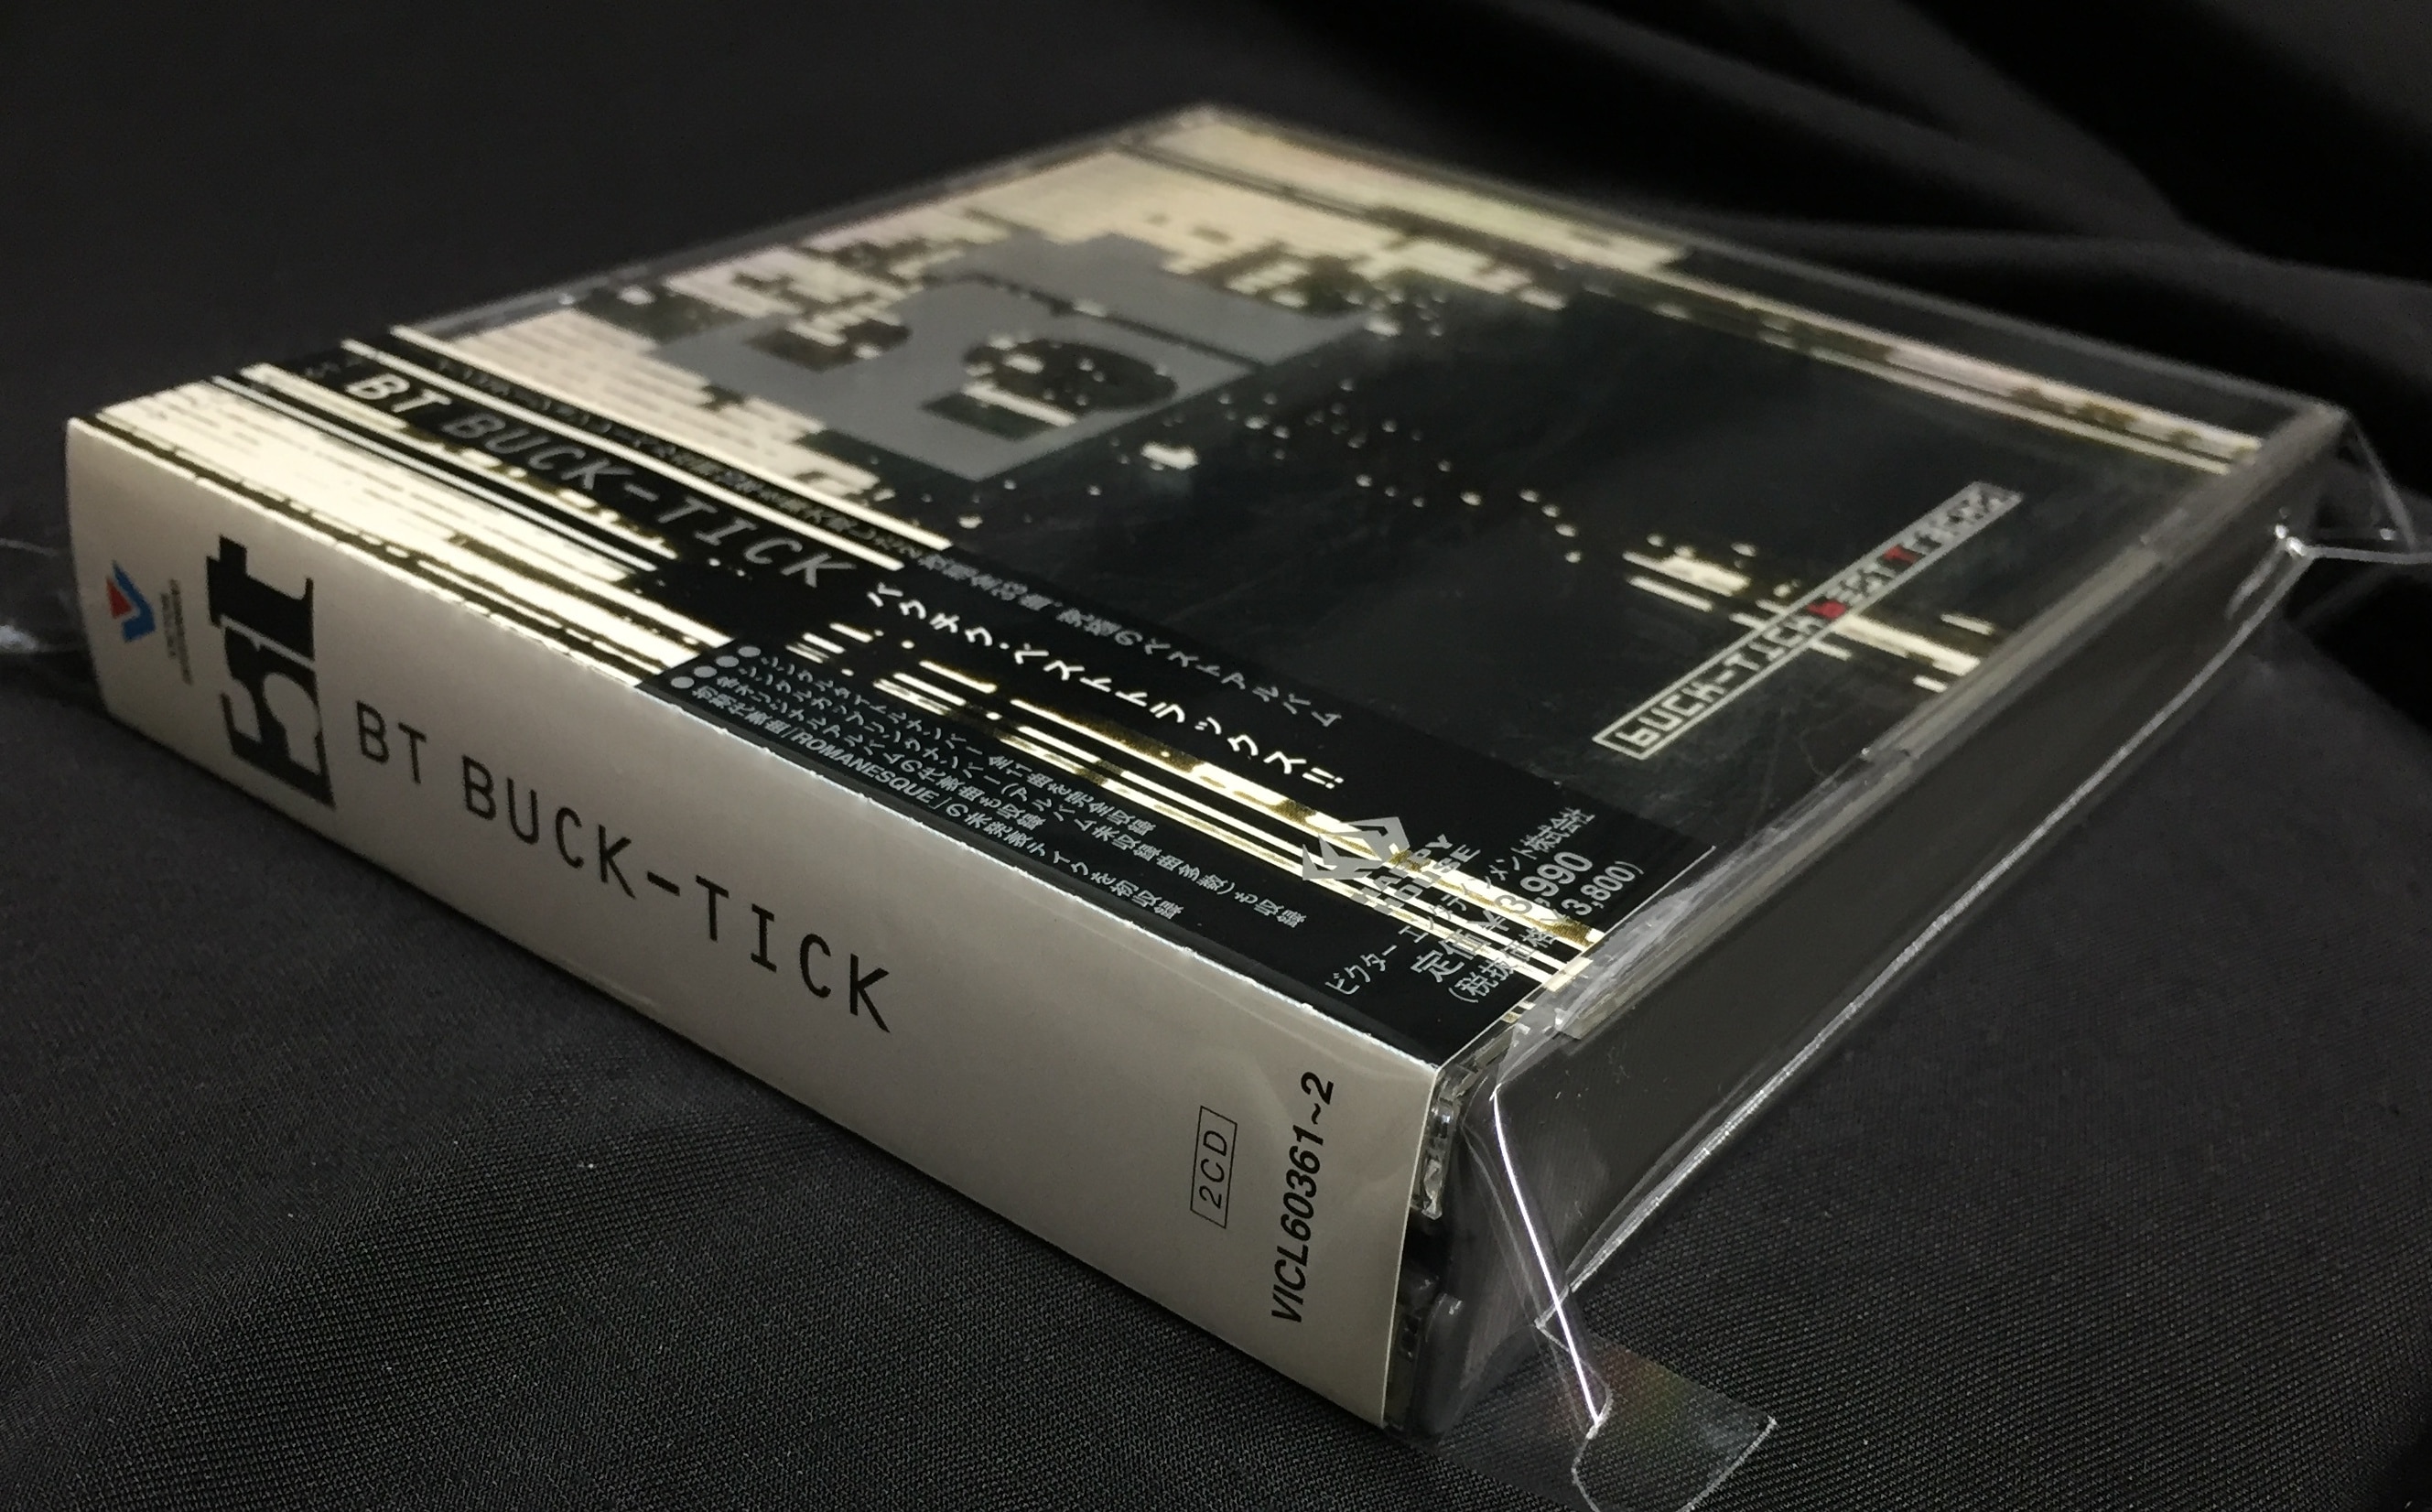 BUCK-TICK 初回限定盤(2CD+フォトブック) BT (BEST TRACKS) | ありある 